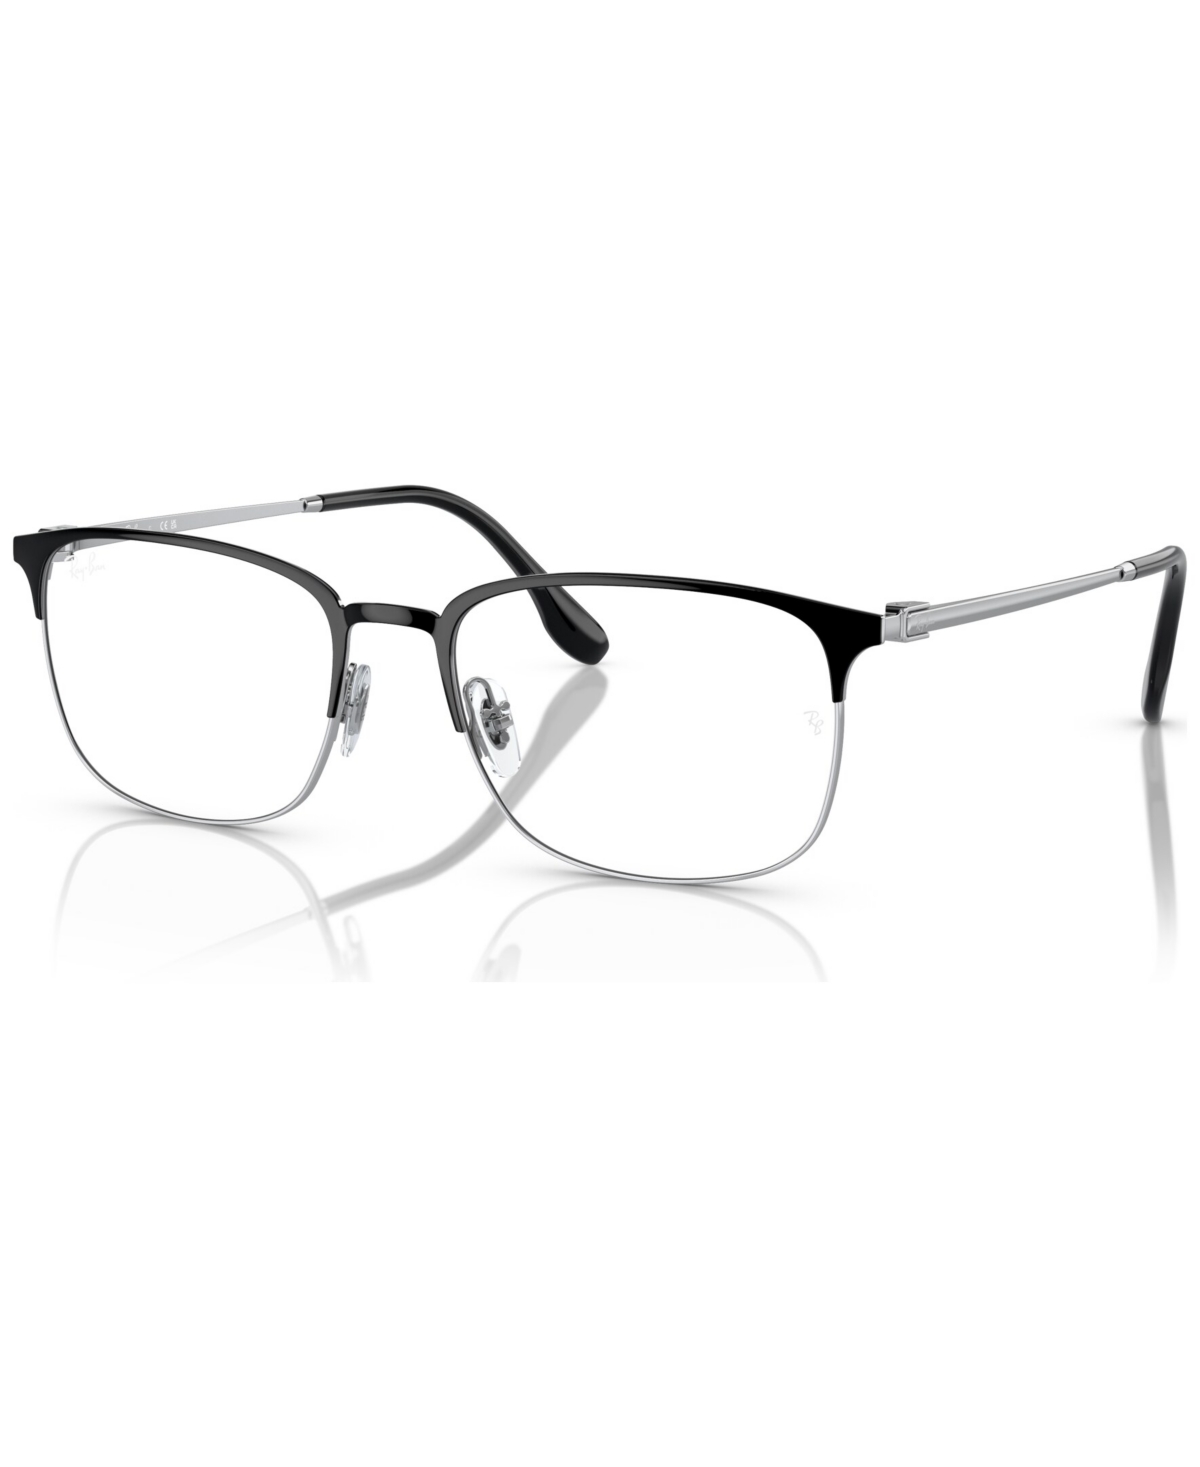 Men's Pillow Eyeglasses, RB6494 54 - Black on Silver-Tone